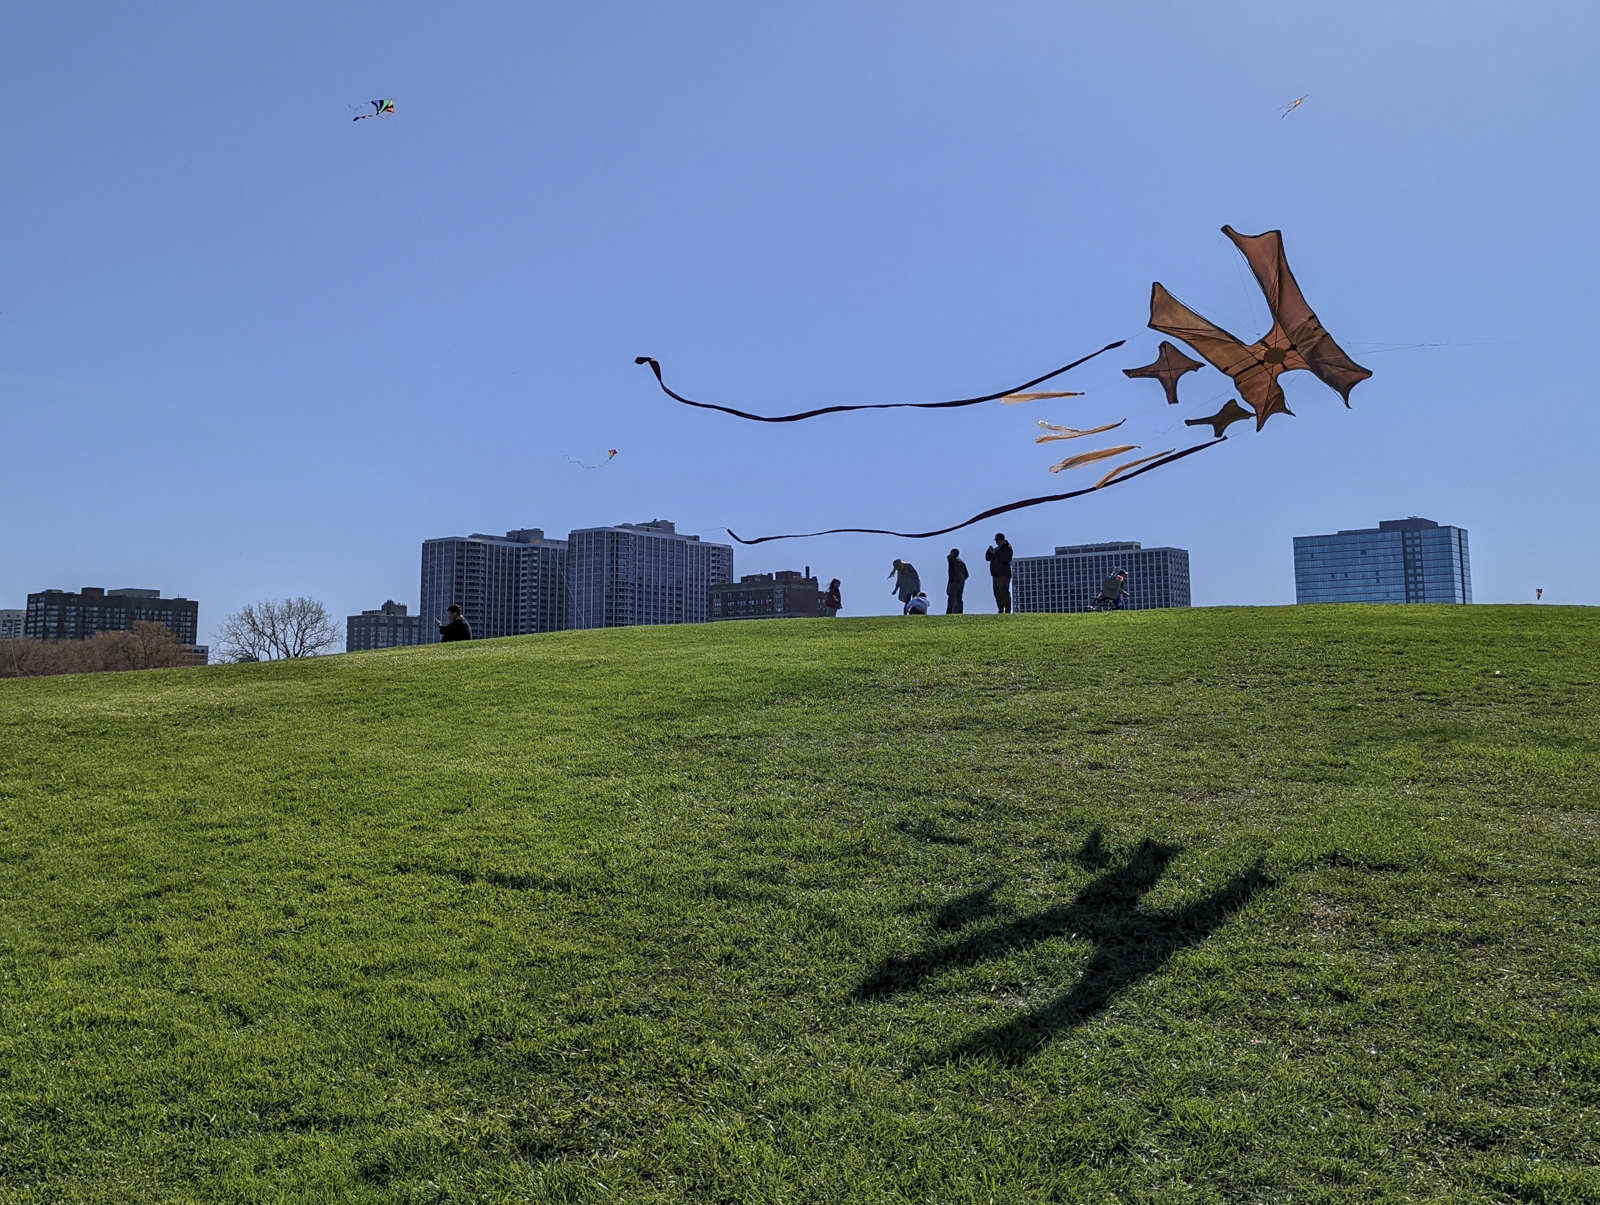 A kite flies horizontally across the sky.